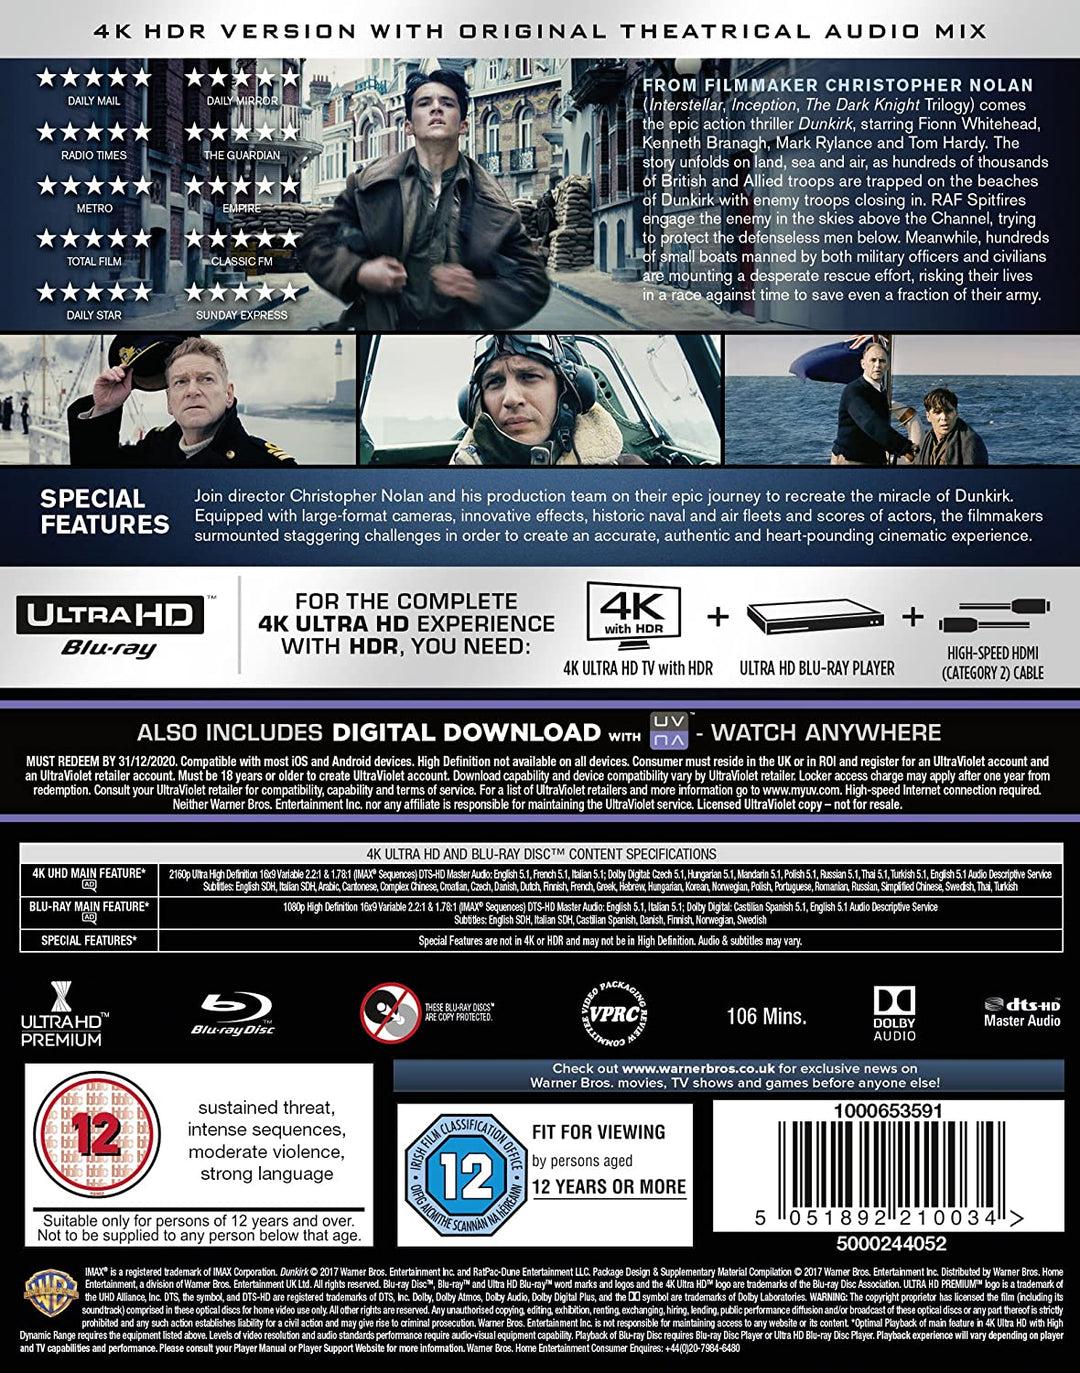 Dunkirk - War/Action [Blu-Ray]